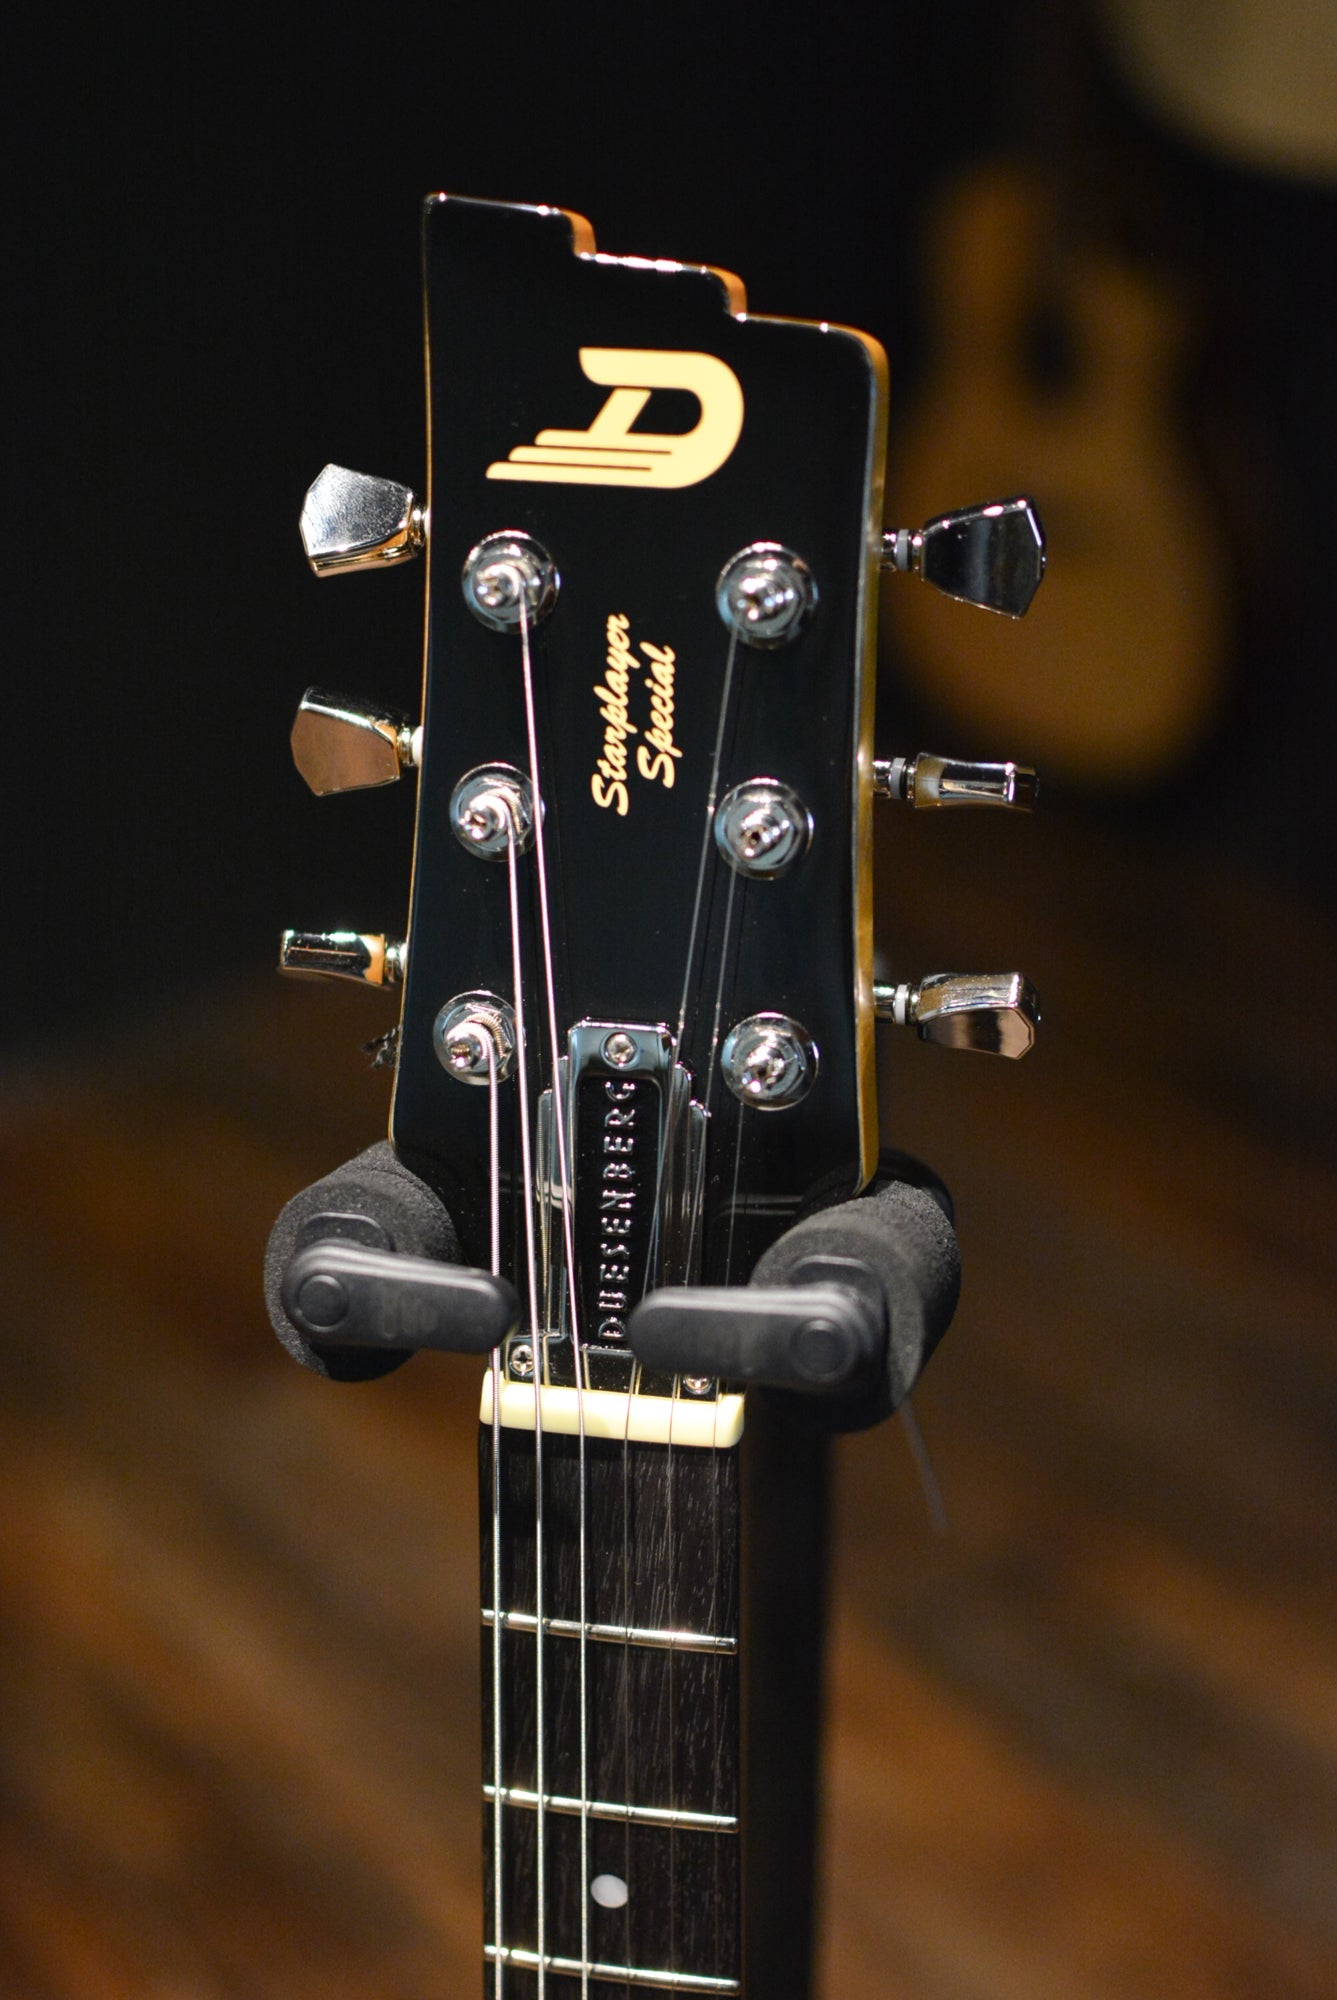 Duesenberg Guitars Starplayer III Electric Guitar (Catalina Red) w/ Hard Case